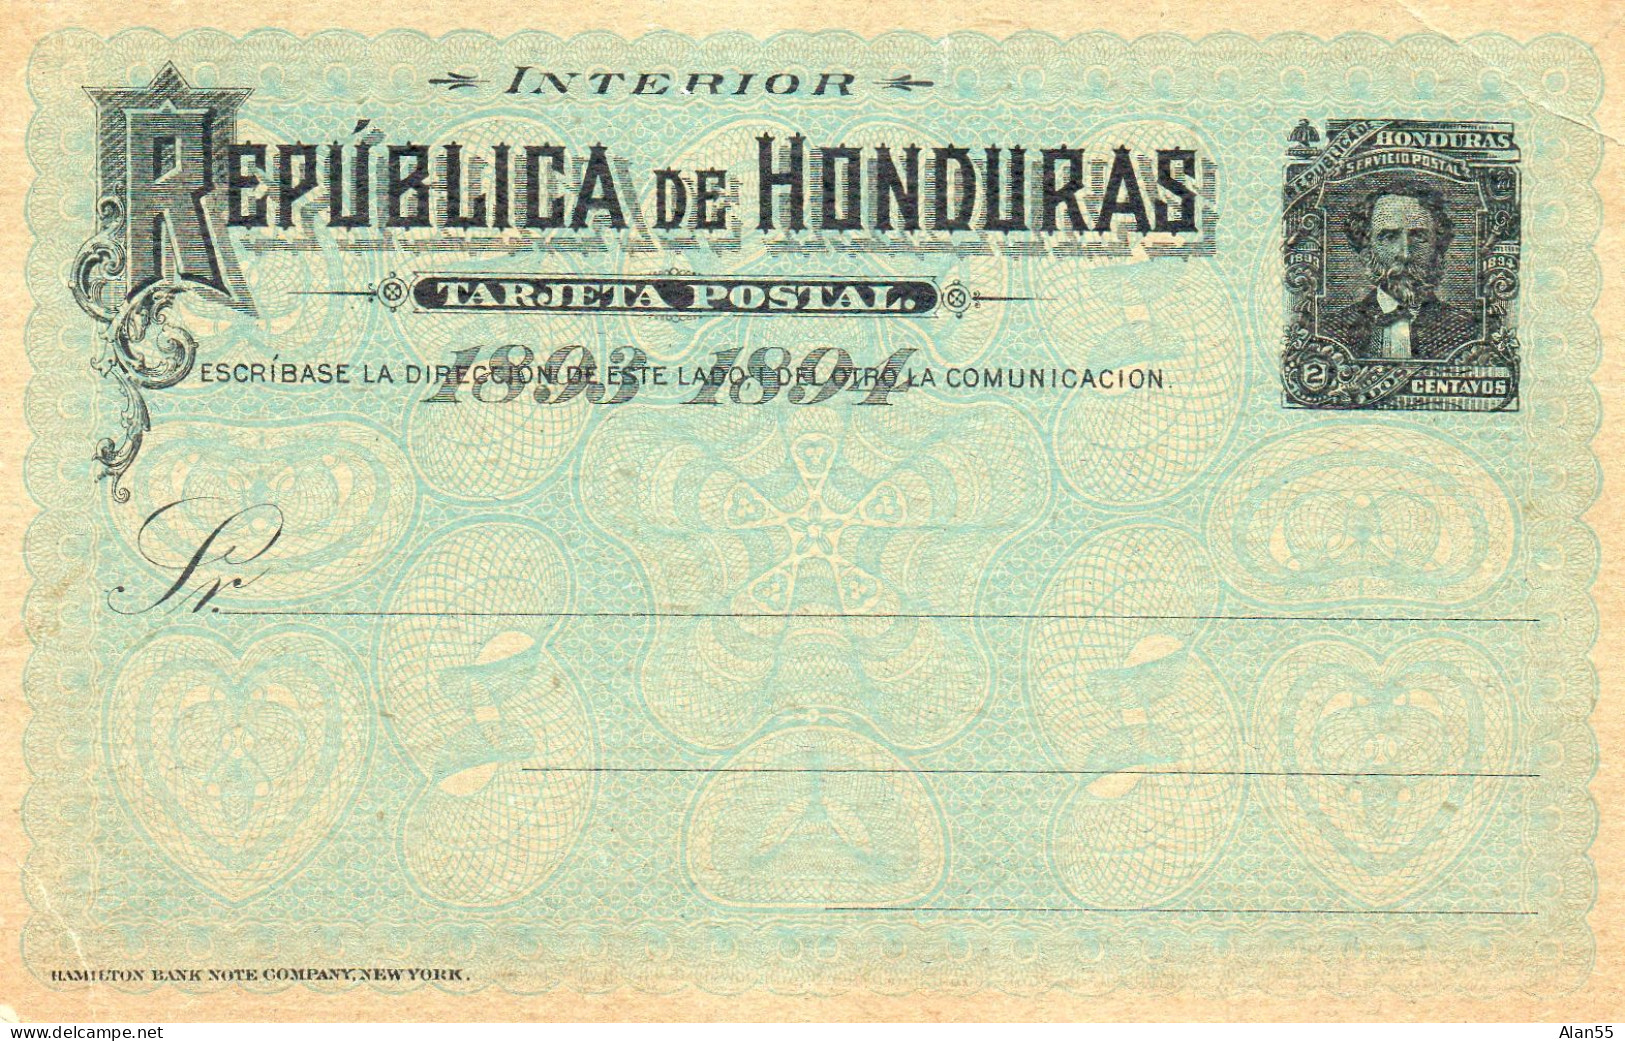 HONDURAS.1893.  TROIS ENTIERS POSTAUX NEUF... AVEC REPONSE PAYEE... - Honduras